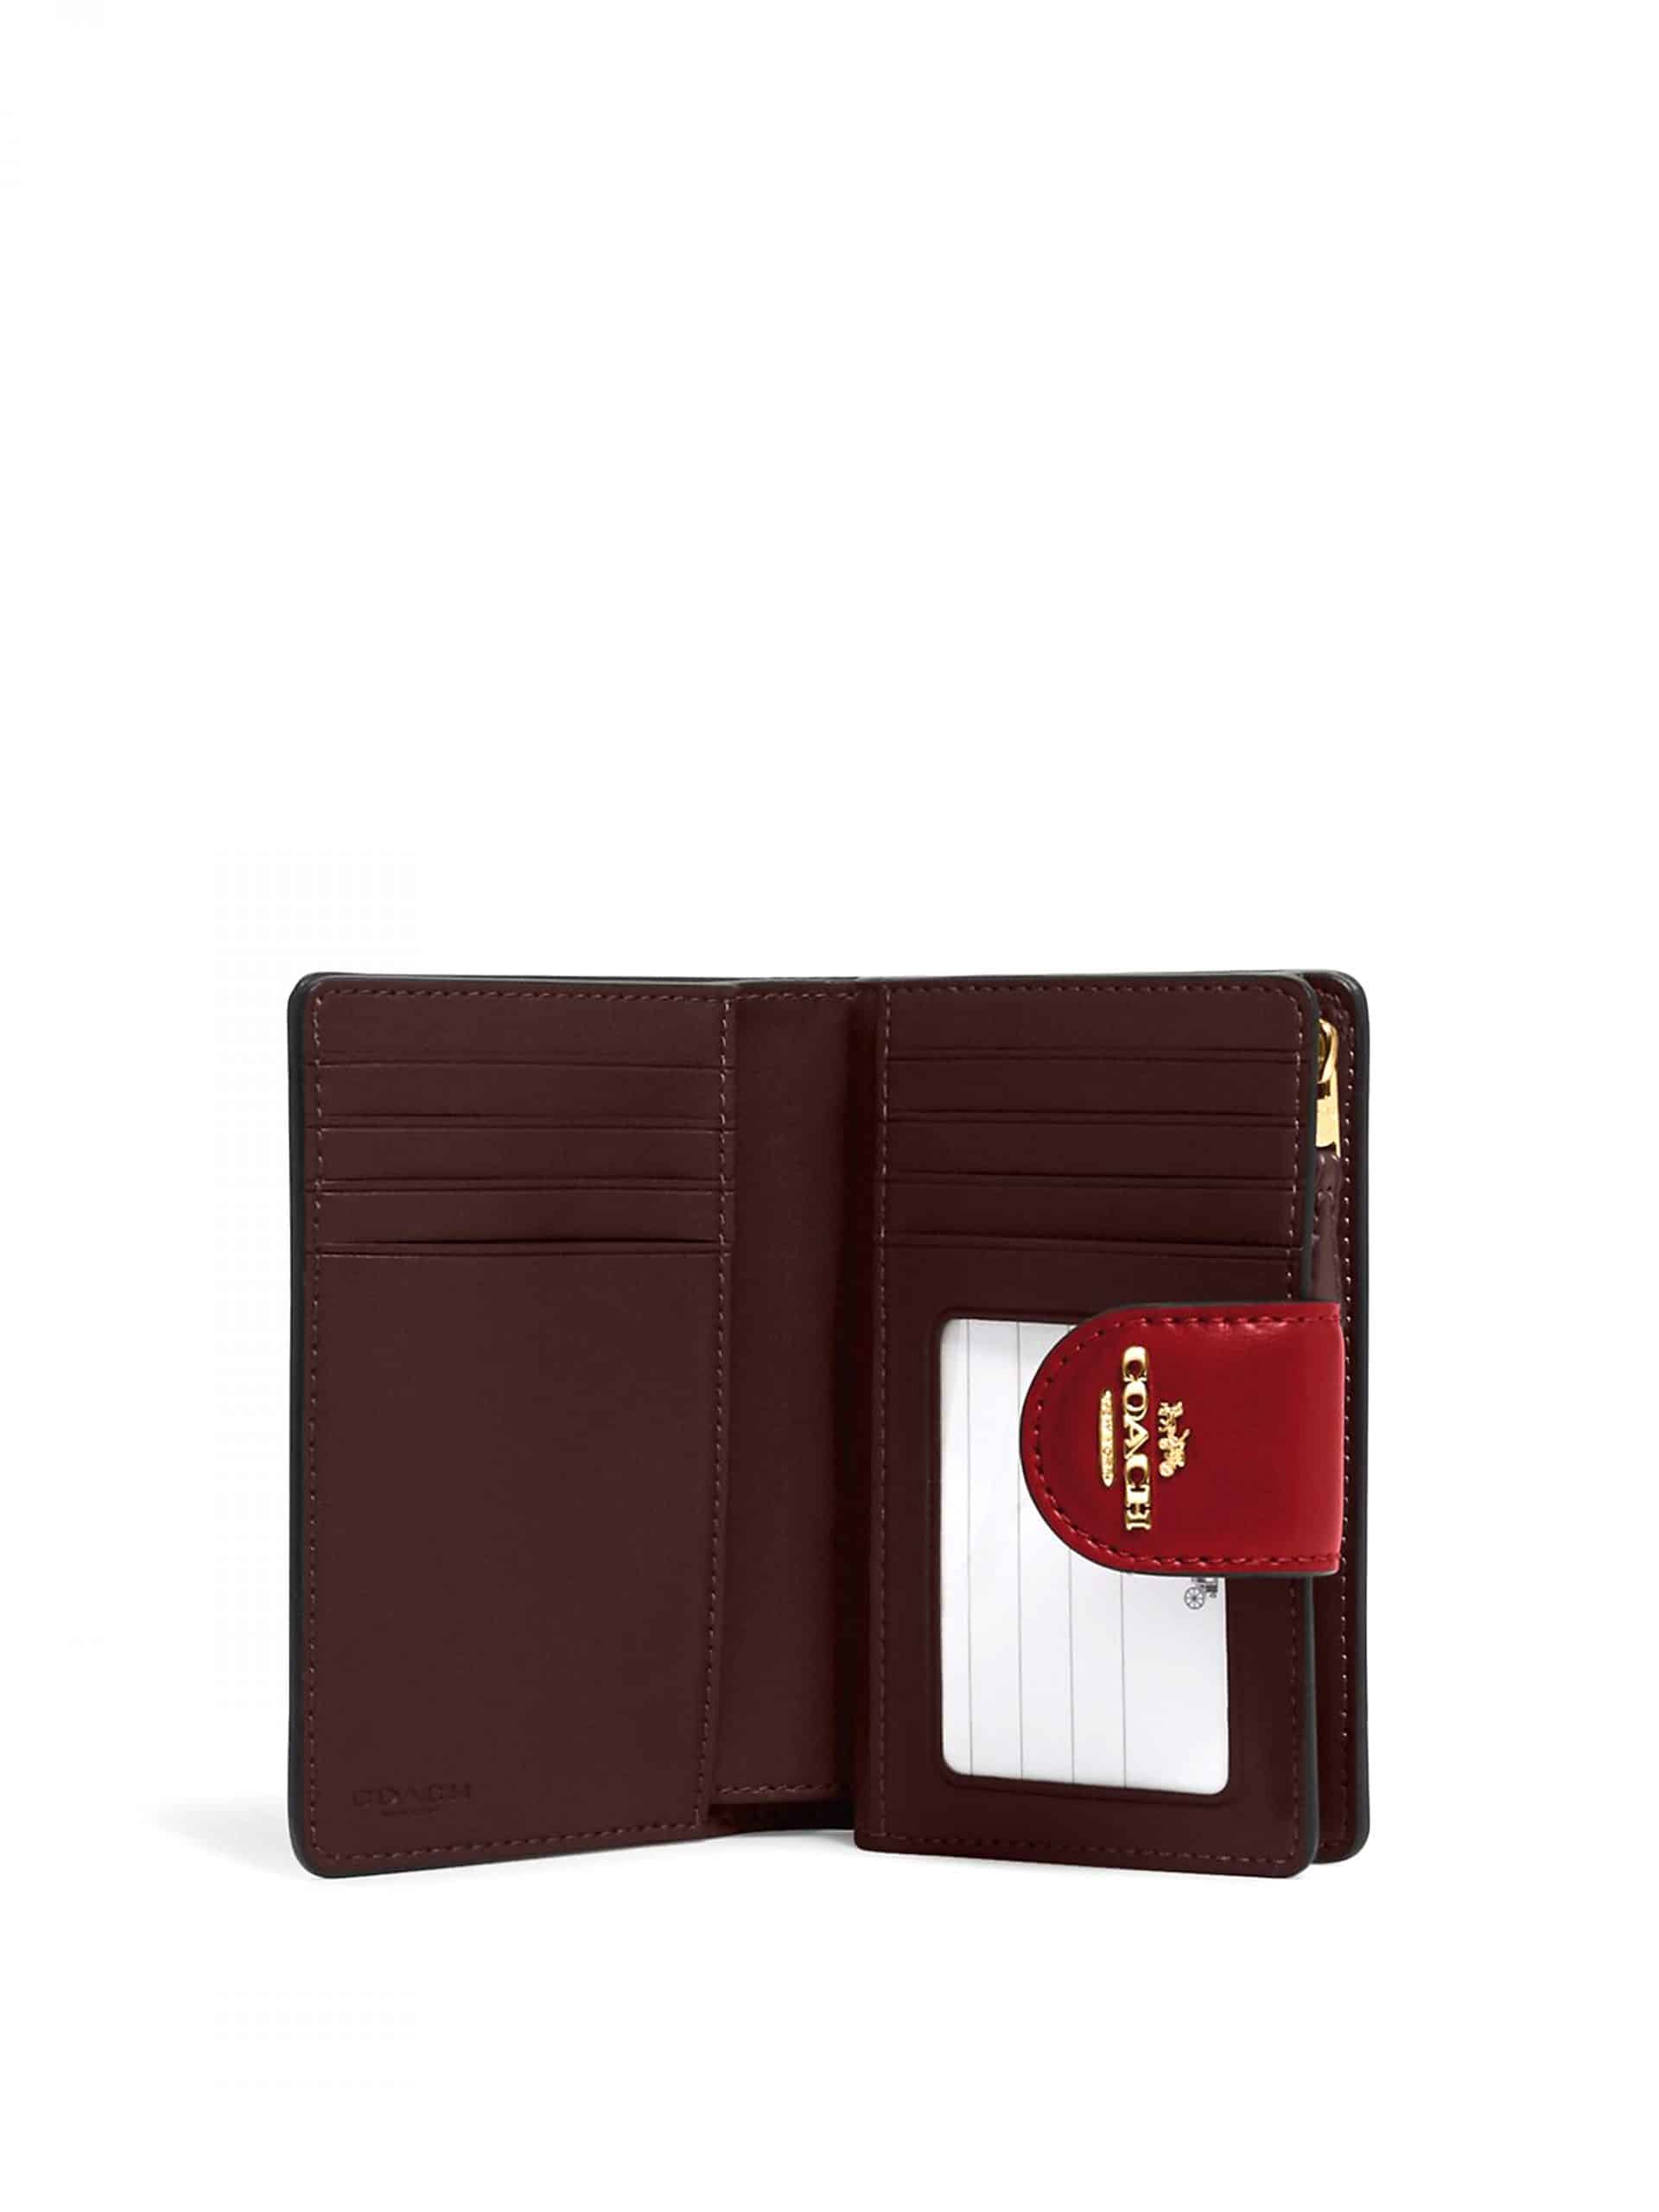 [AS-IS] Coach Medium Corner Zip Wallet C0082 Signature Brown 1941 Red